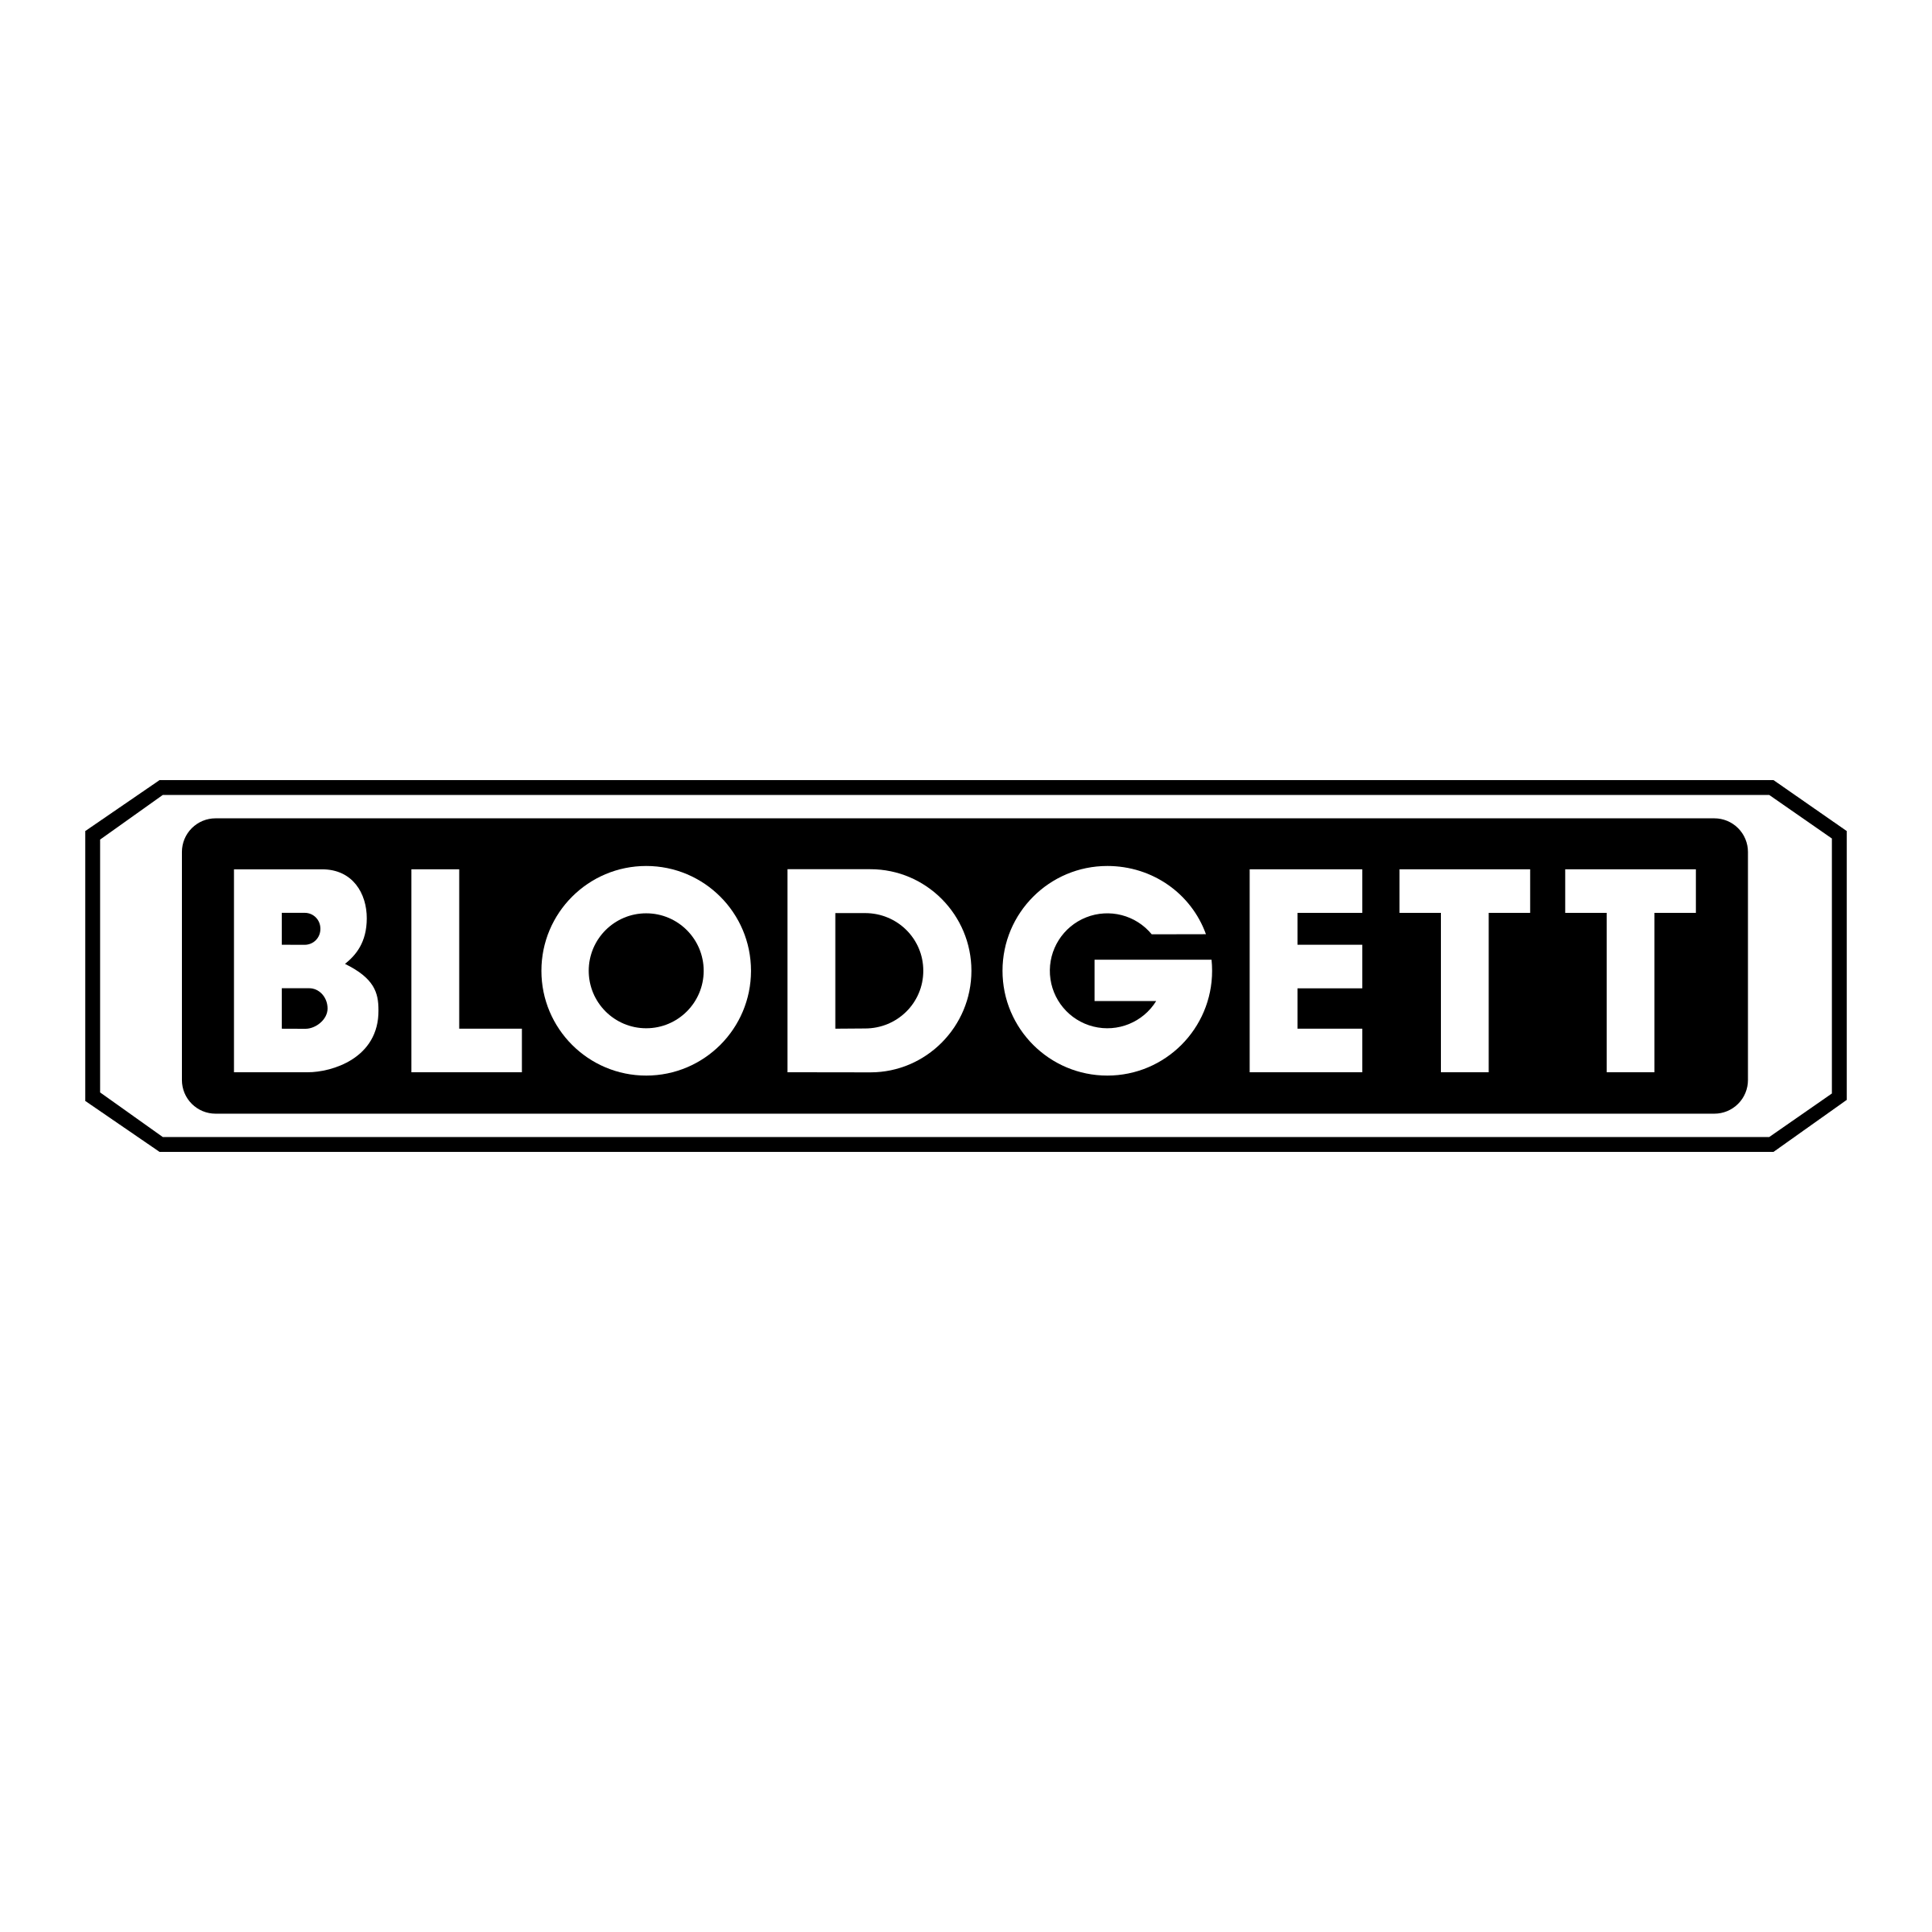 Blodgett Logo - Blodgett 01 Logo PNG Transparent & SVG Vector - Freebie Supply